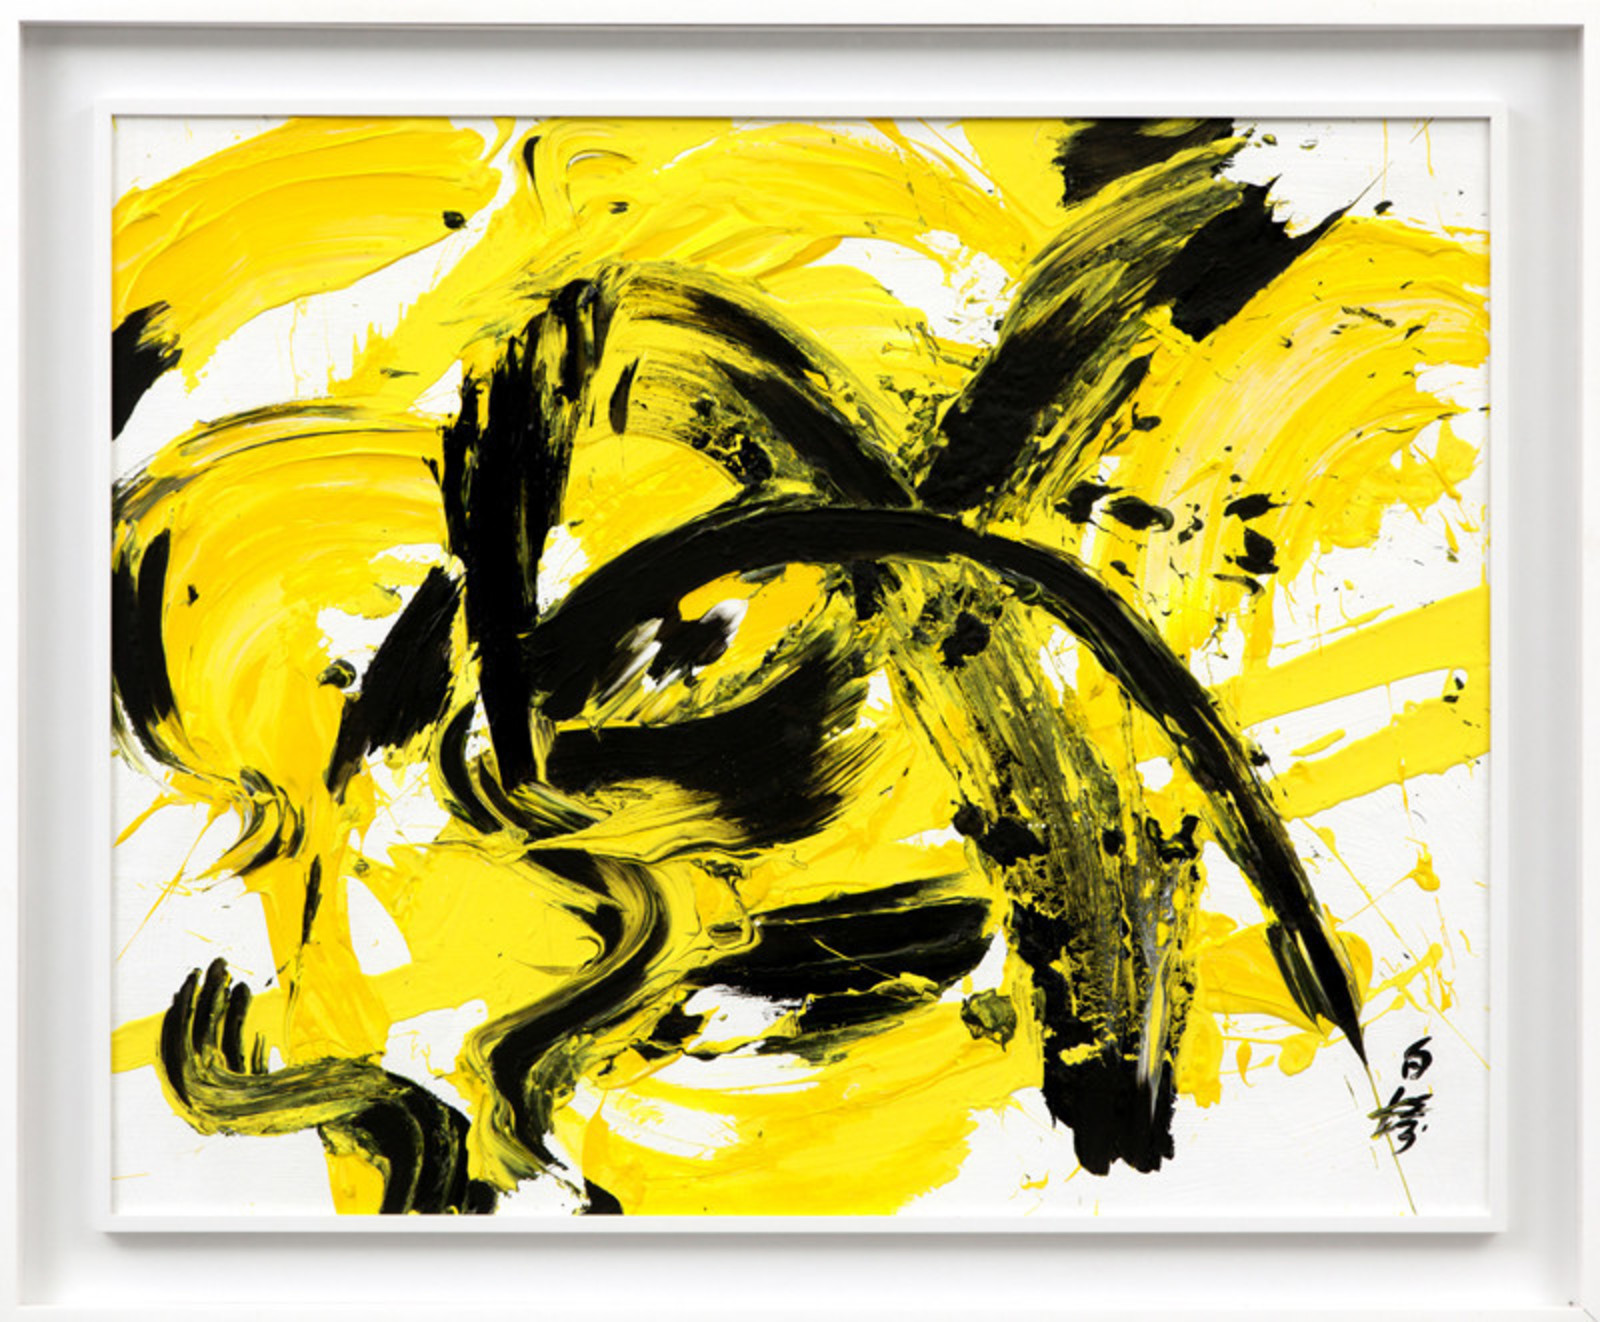 Kazuo Shiraga. Yellow line. 1992. Oil on canvas. Municipal Museum of Amsterdam, Amsterdam, Netherlands. 73 x 91 cm